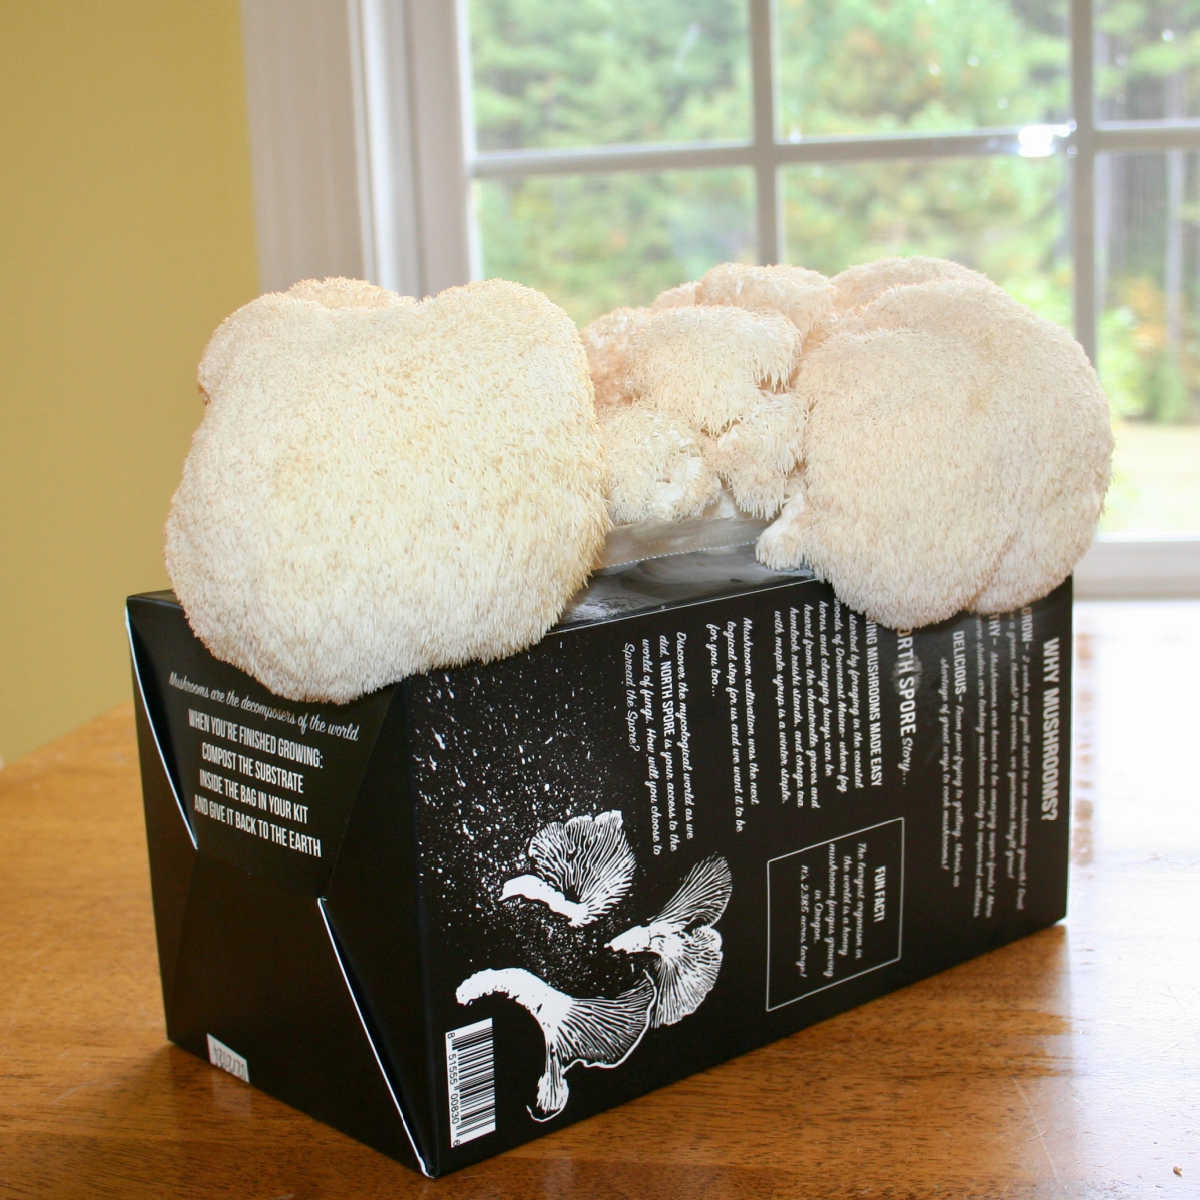 north spore mushroom kit